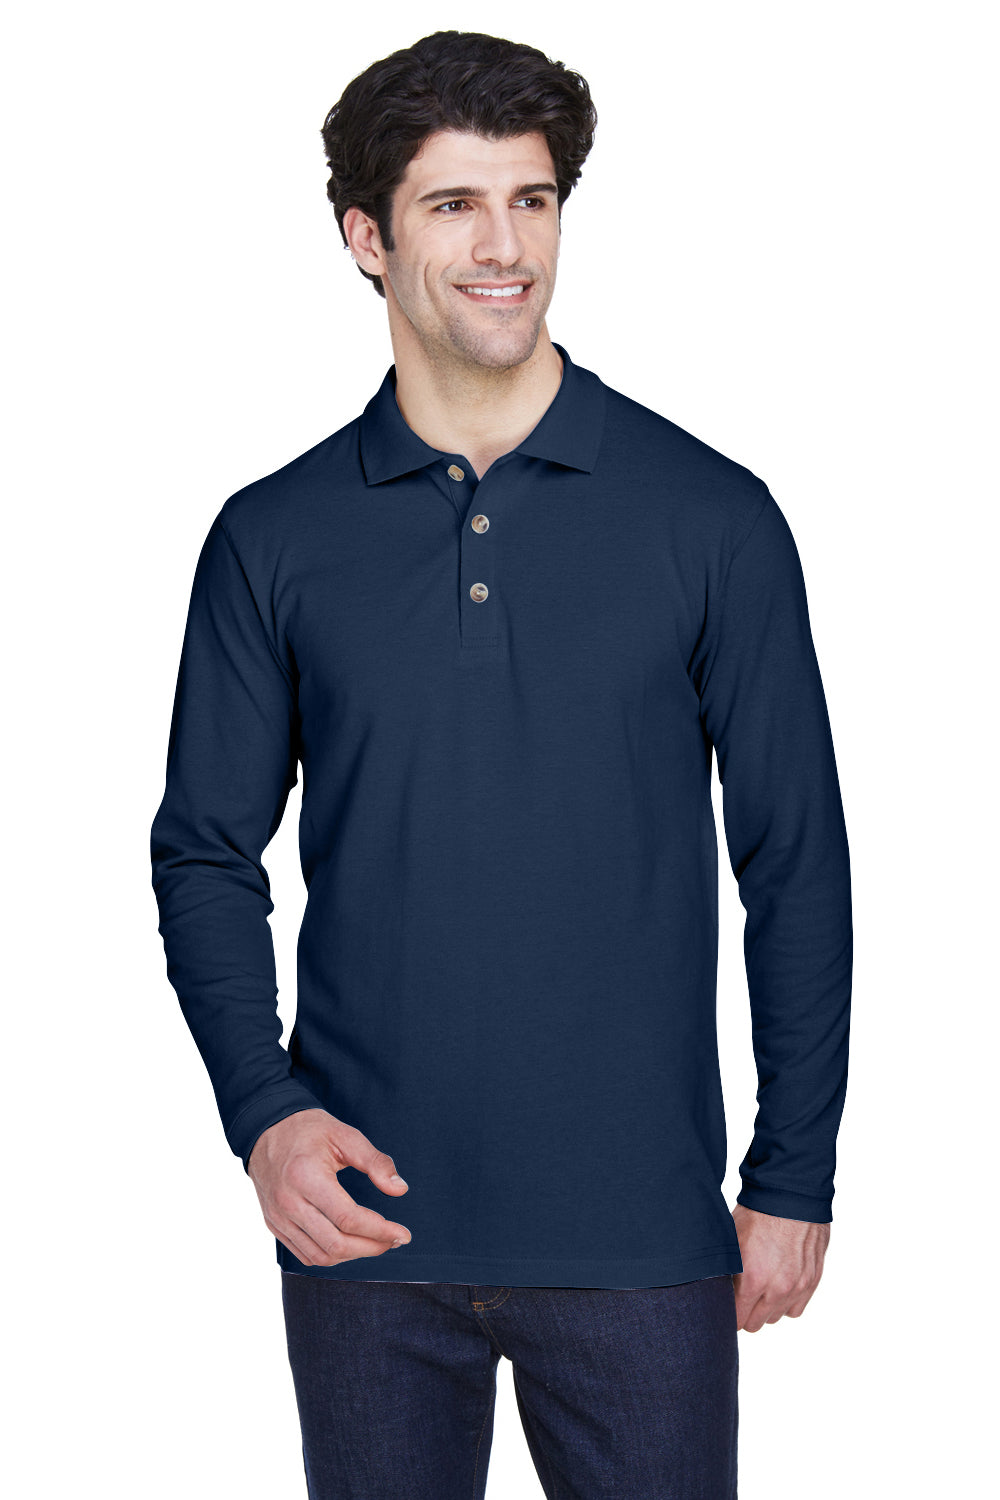 UltraClub 8532 Mens Classic Long Sleeve Polo Shirt Navy Blue Front